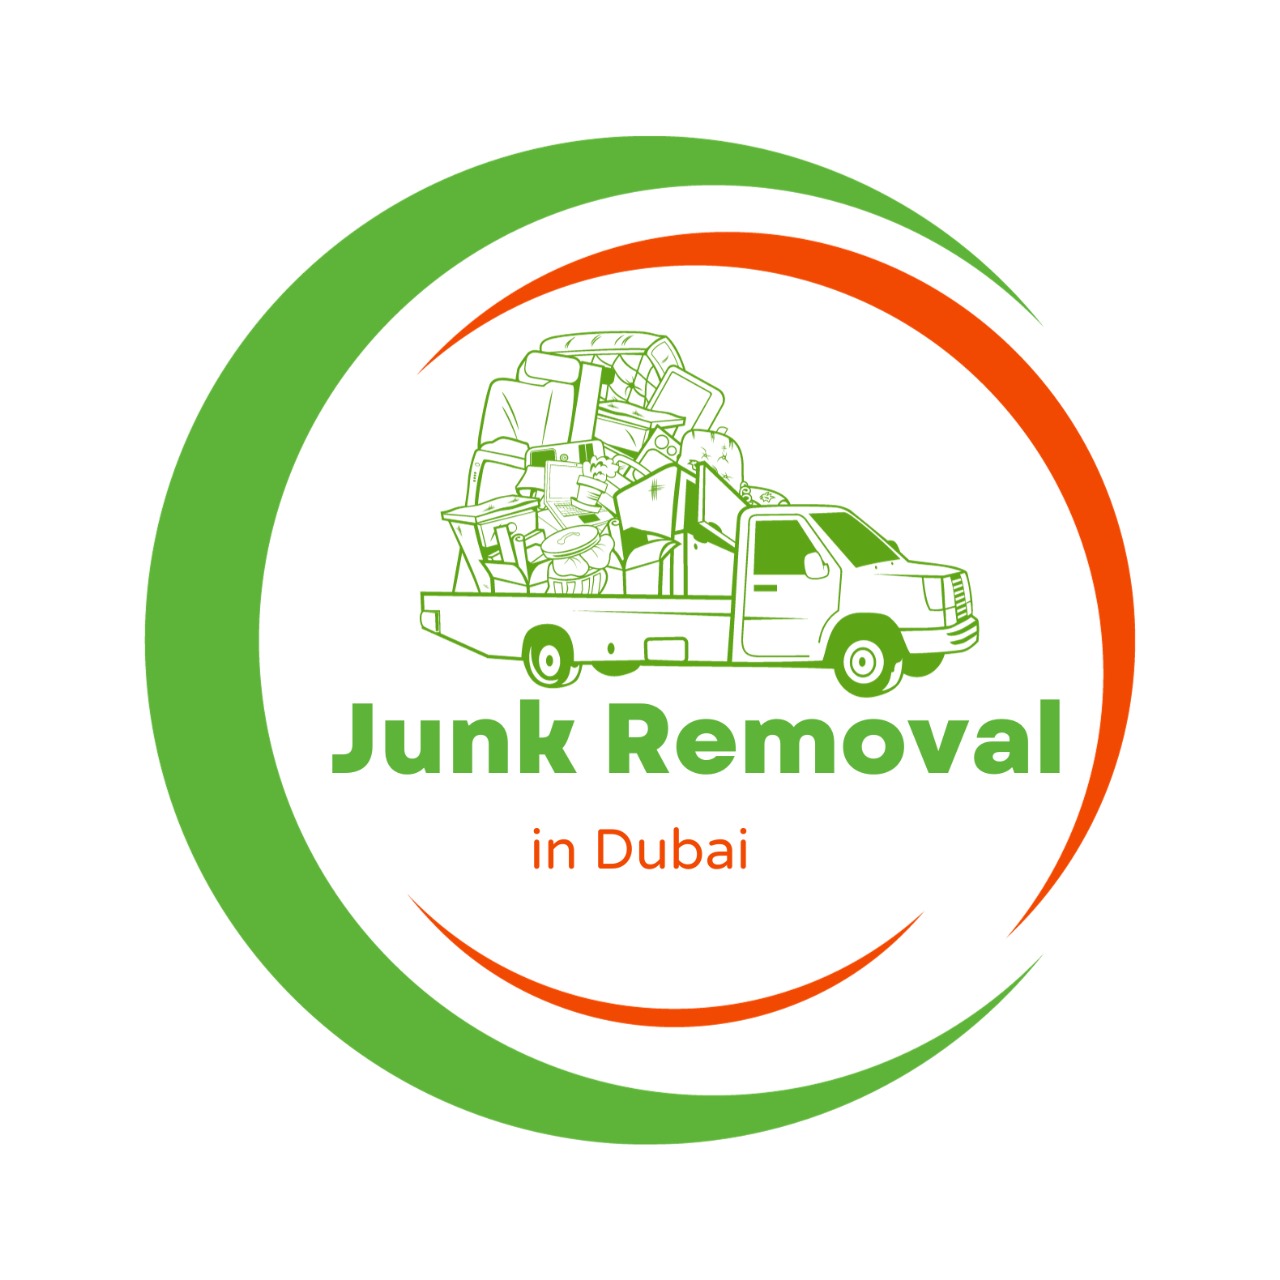 Junk removal in dubai logo